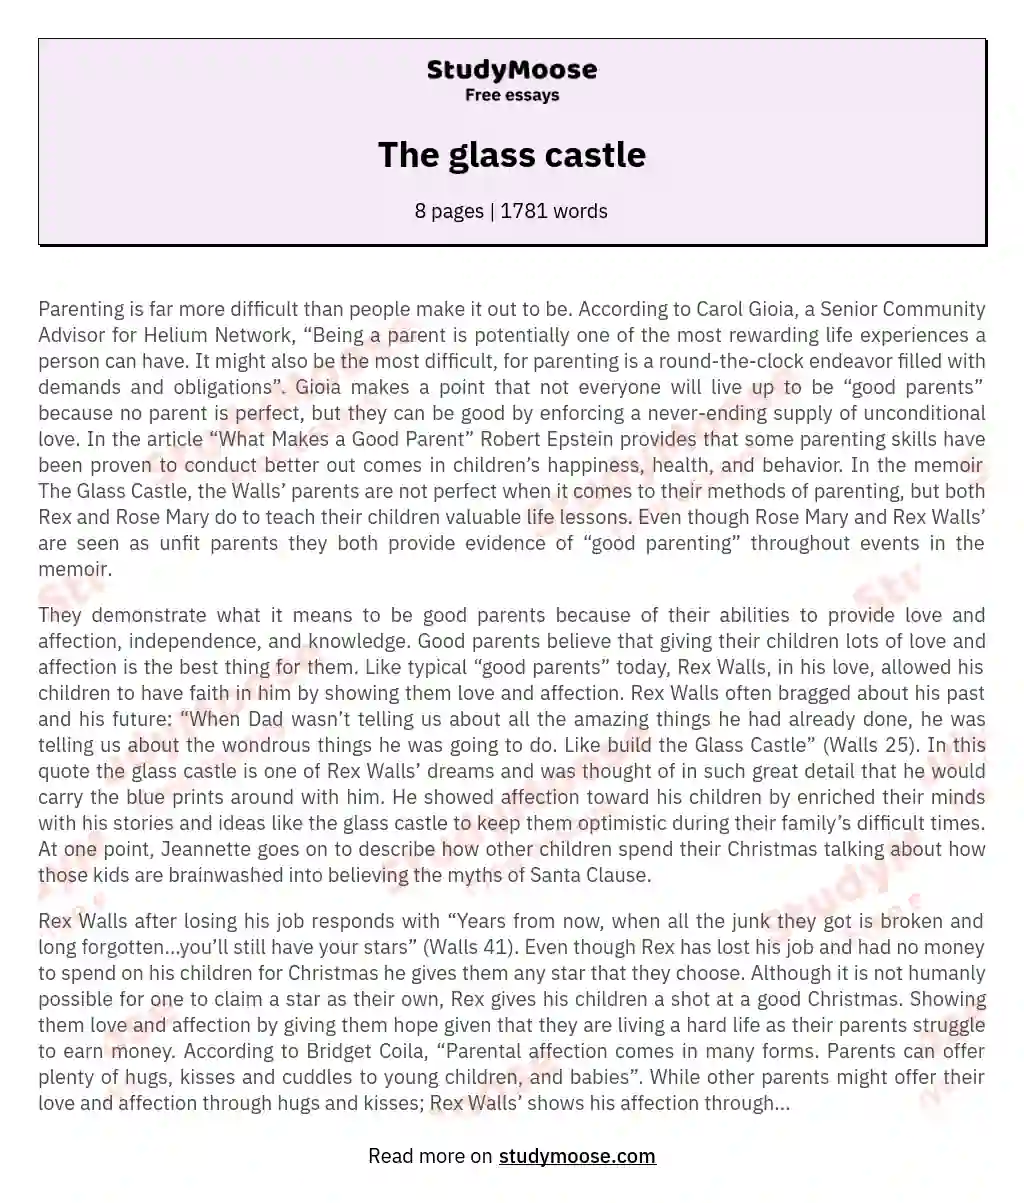 The glass castle